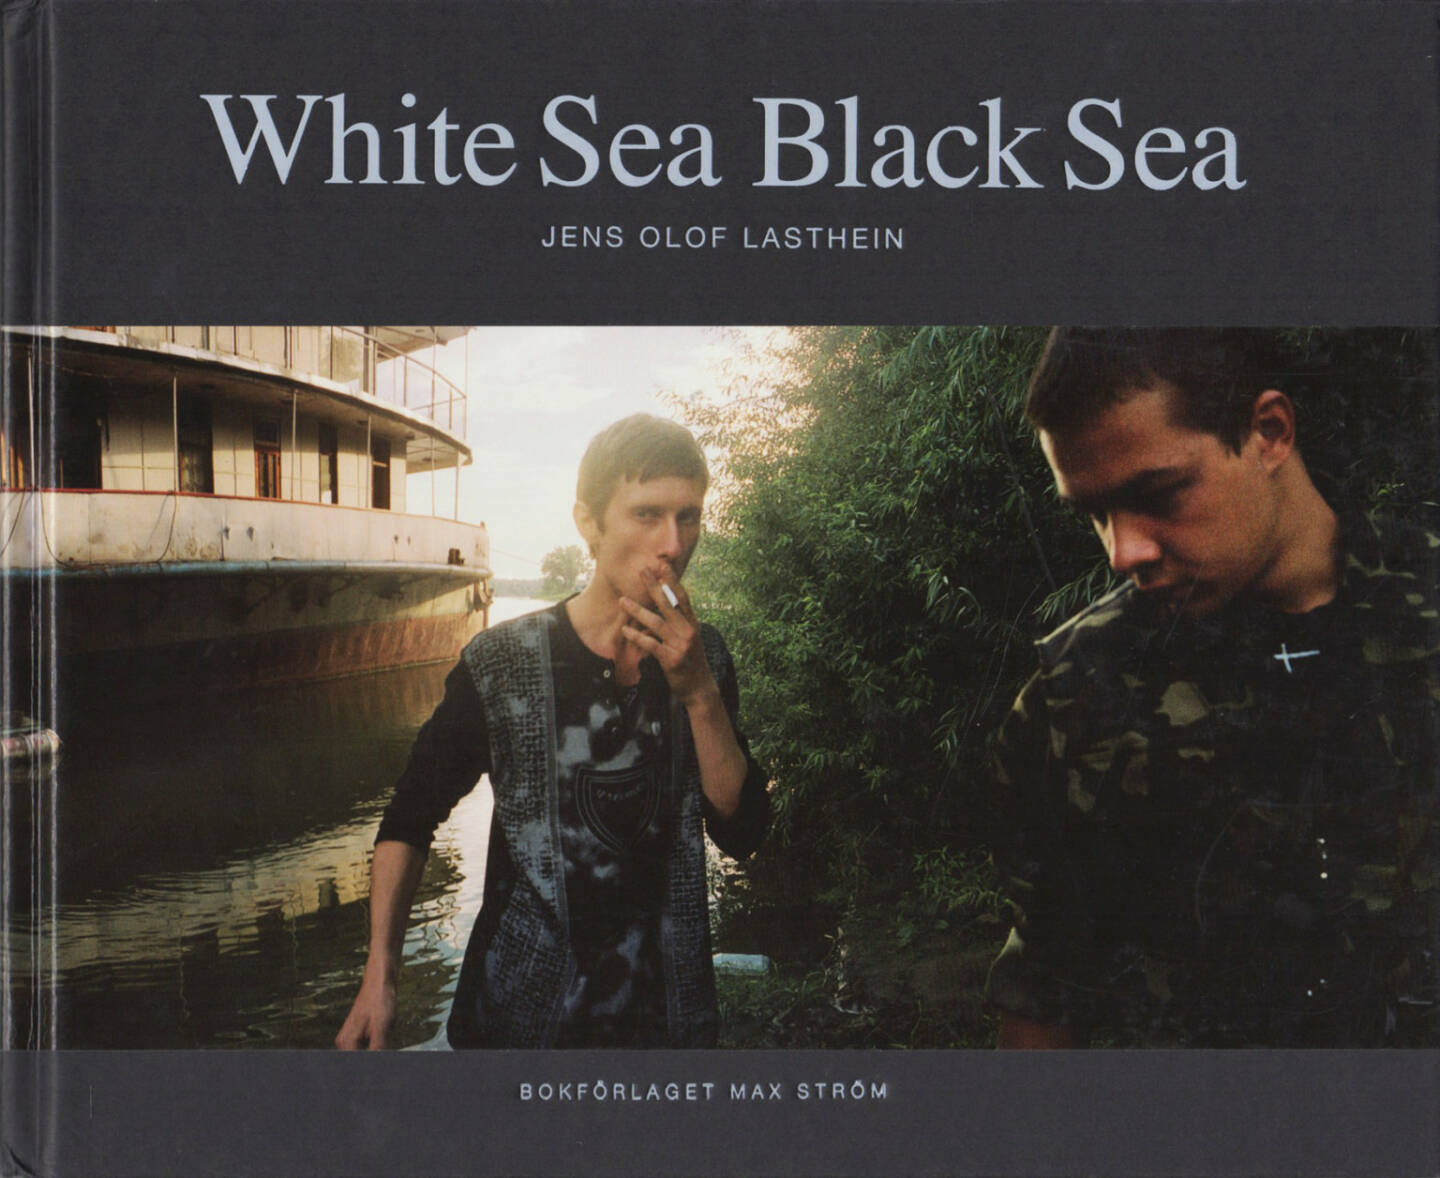 Jens Olof Lasthein - White sea Black sea, Max Ström 2008, Cover - http://josefchladek.com/book/jens_olof_lasthein_-_white_sea_black_sea